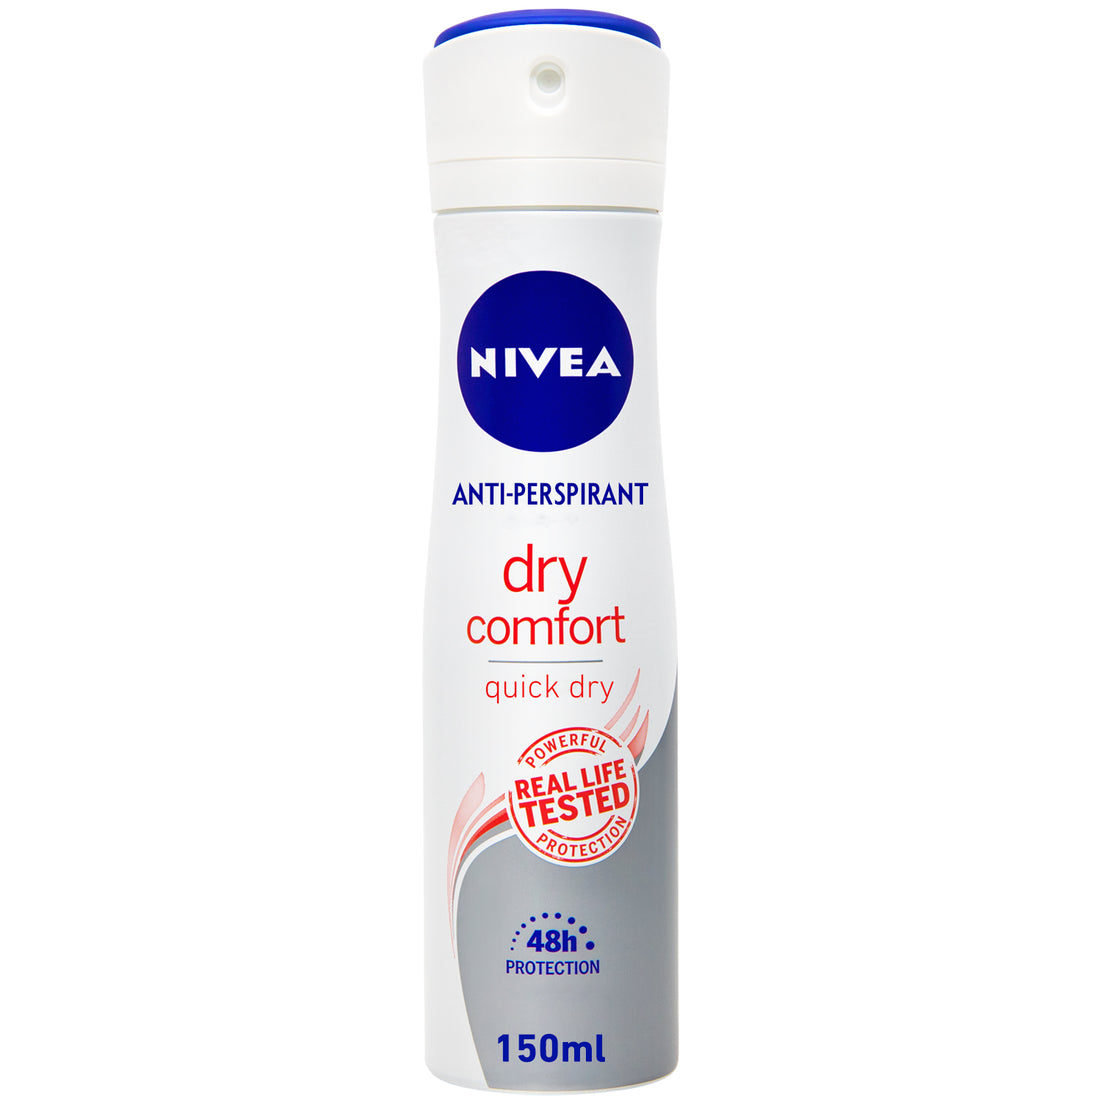 Nivea Dry Comfort, Deodorant for Women, Spray 150ml